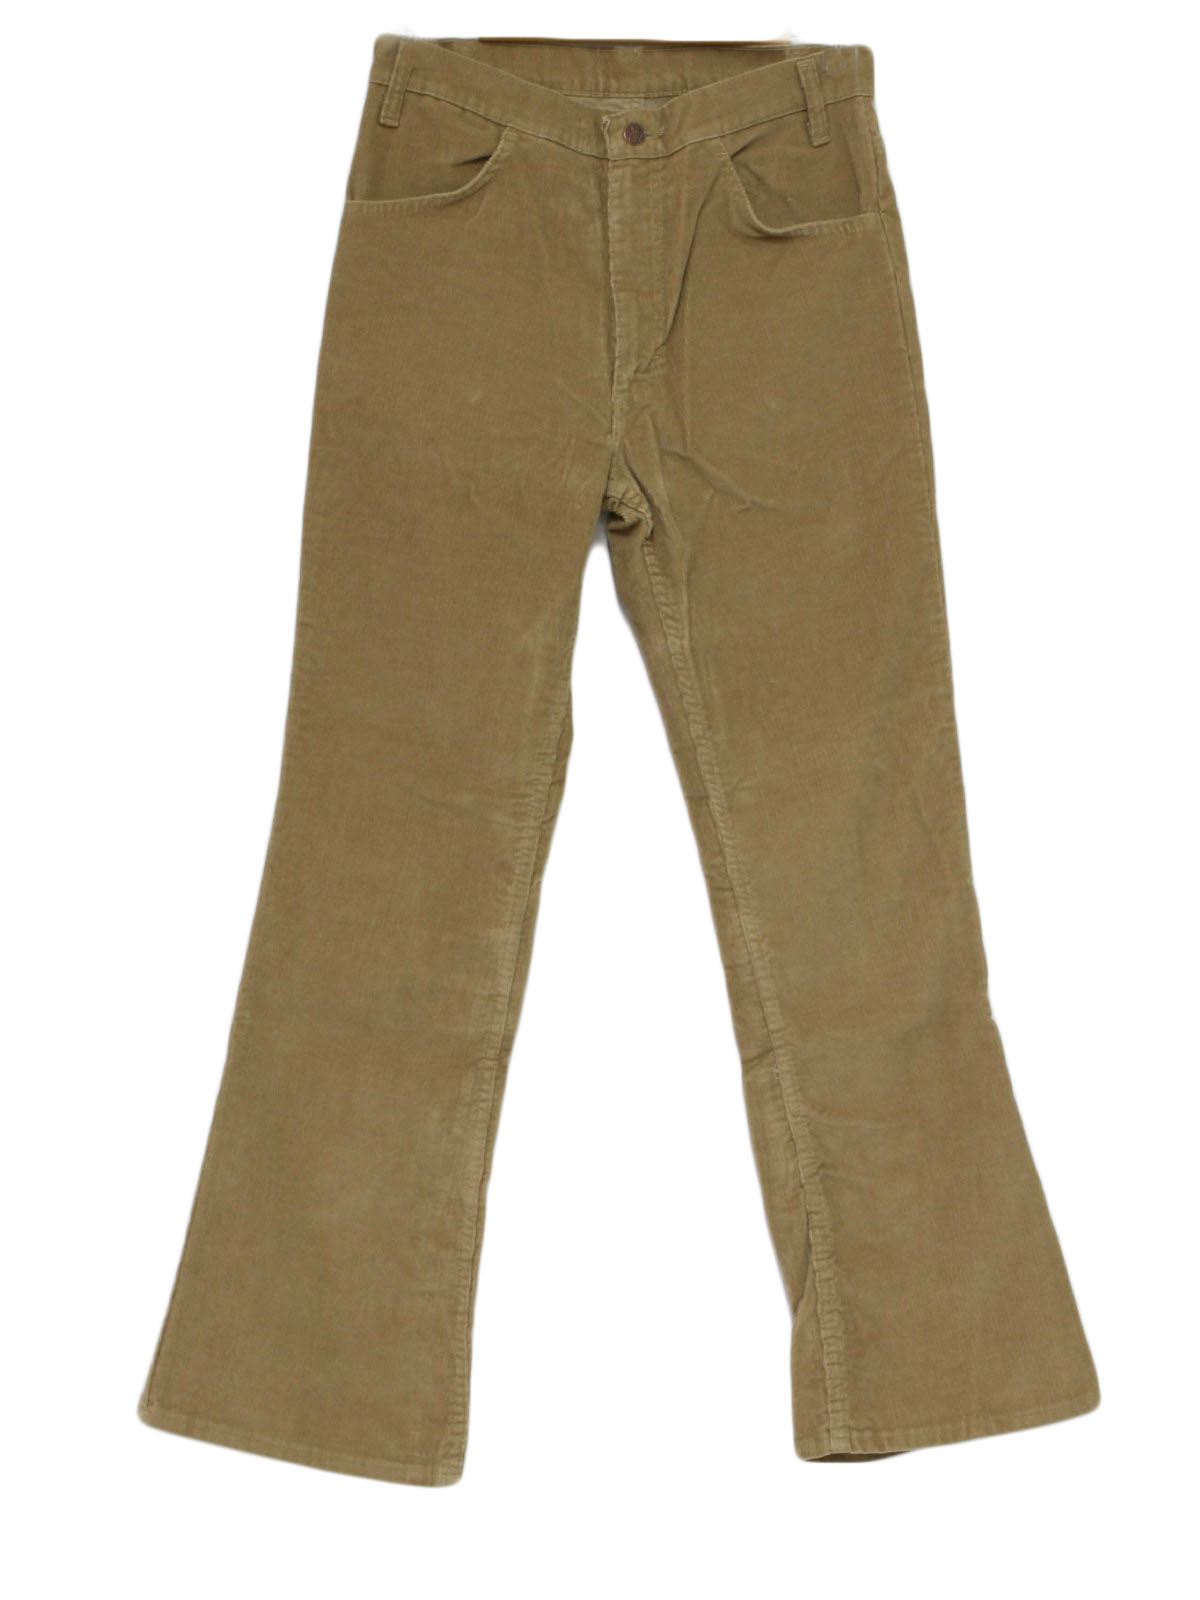 Retro 1980's Pants (Thumbs up) : 80s -Thumbs up- Mens tan cotton pin ...